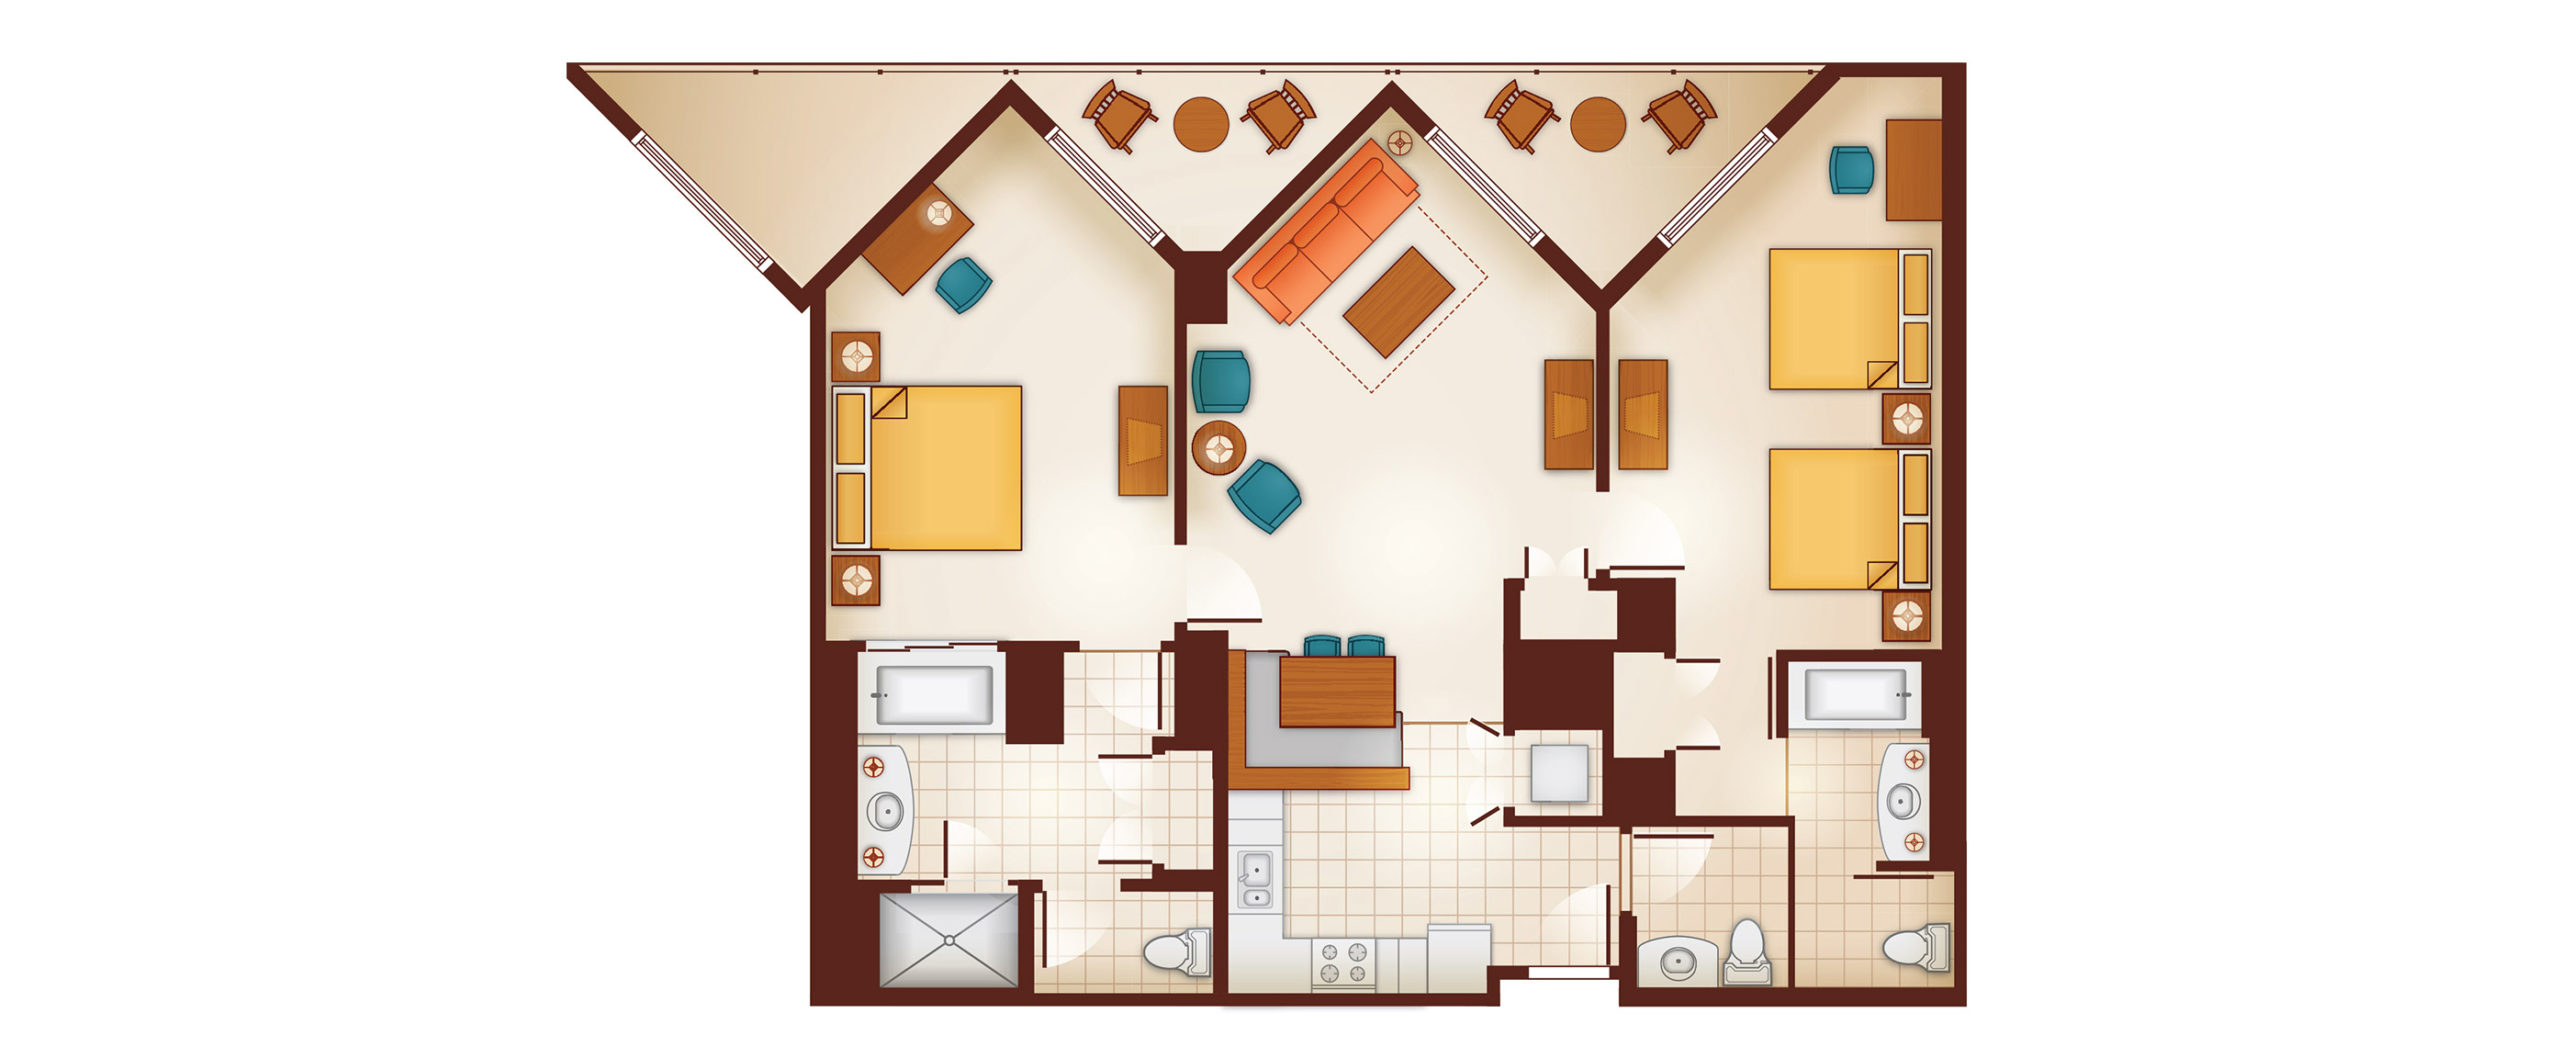 Aulani Two Bedroom Floor plan